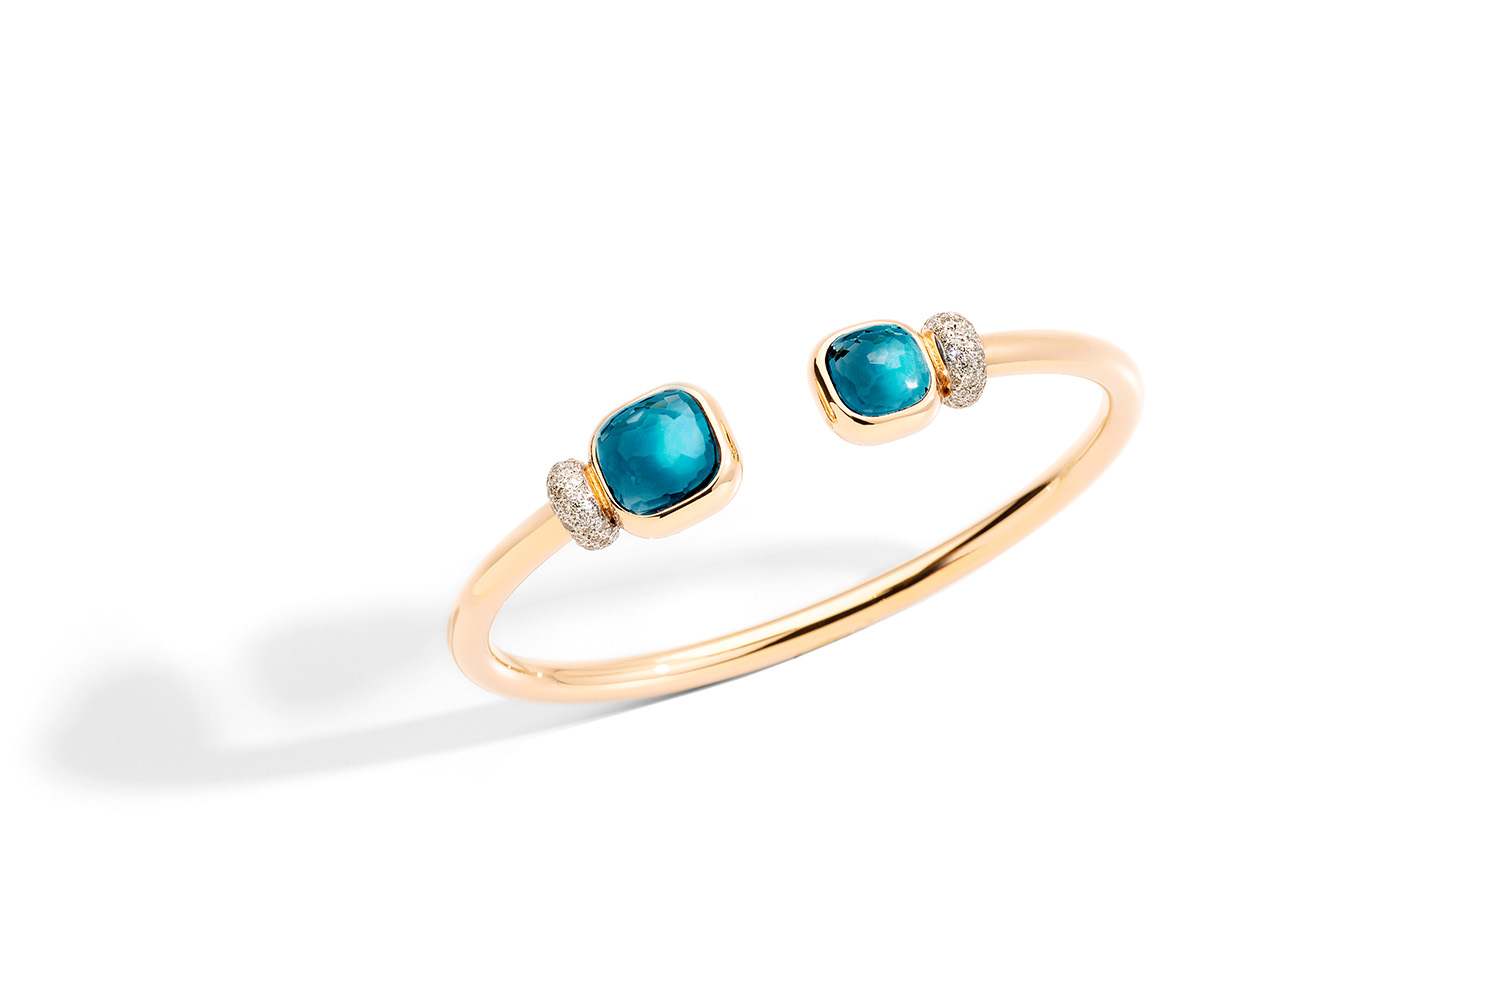 NUDO-bracelet-in-rose-gold-with-London-blue-topaz-and-white-diamonds-by-Pomellato-–-kopia